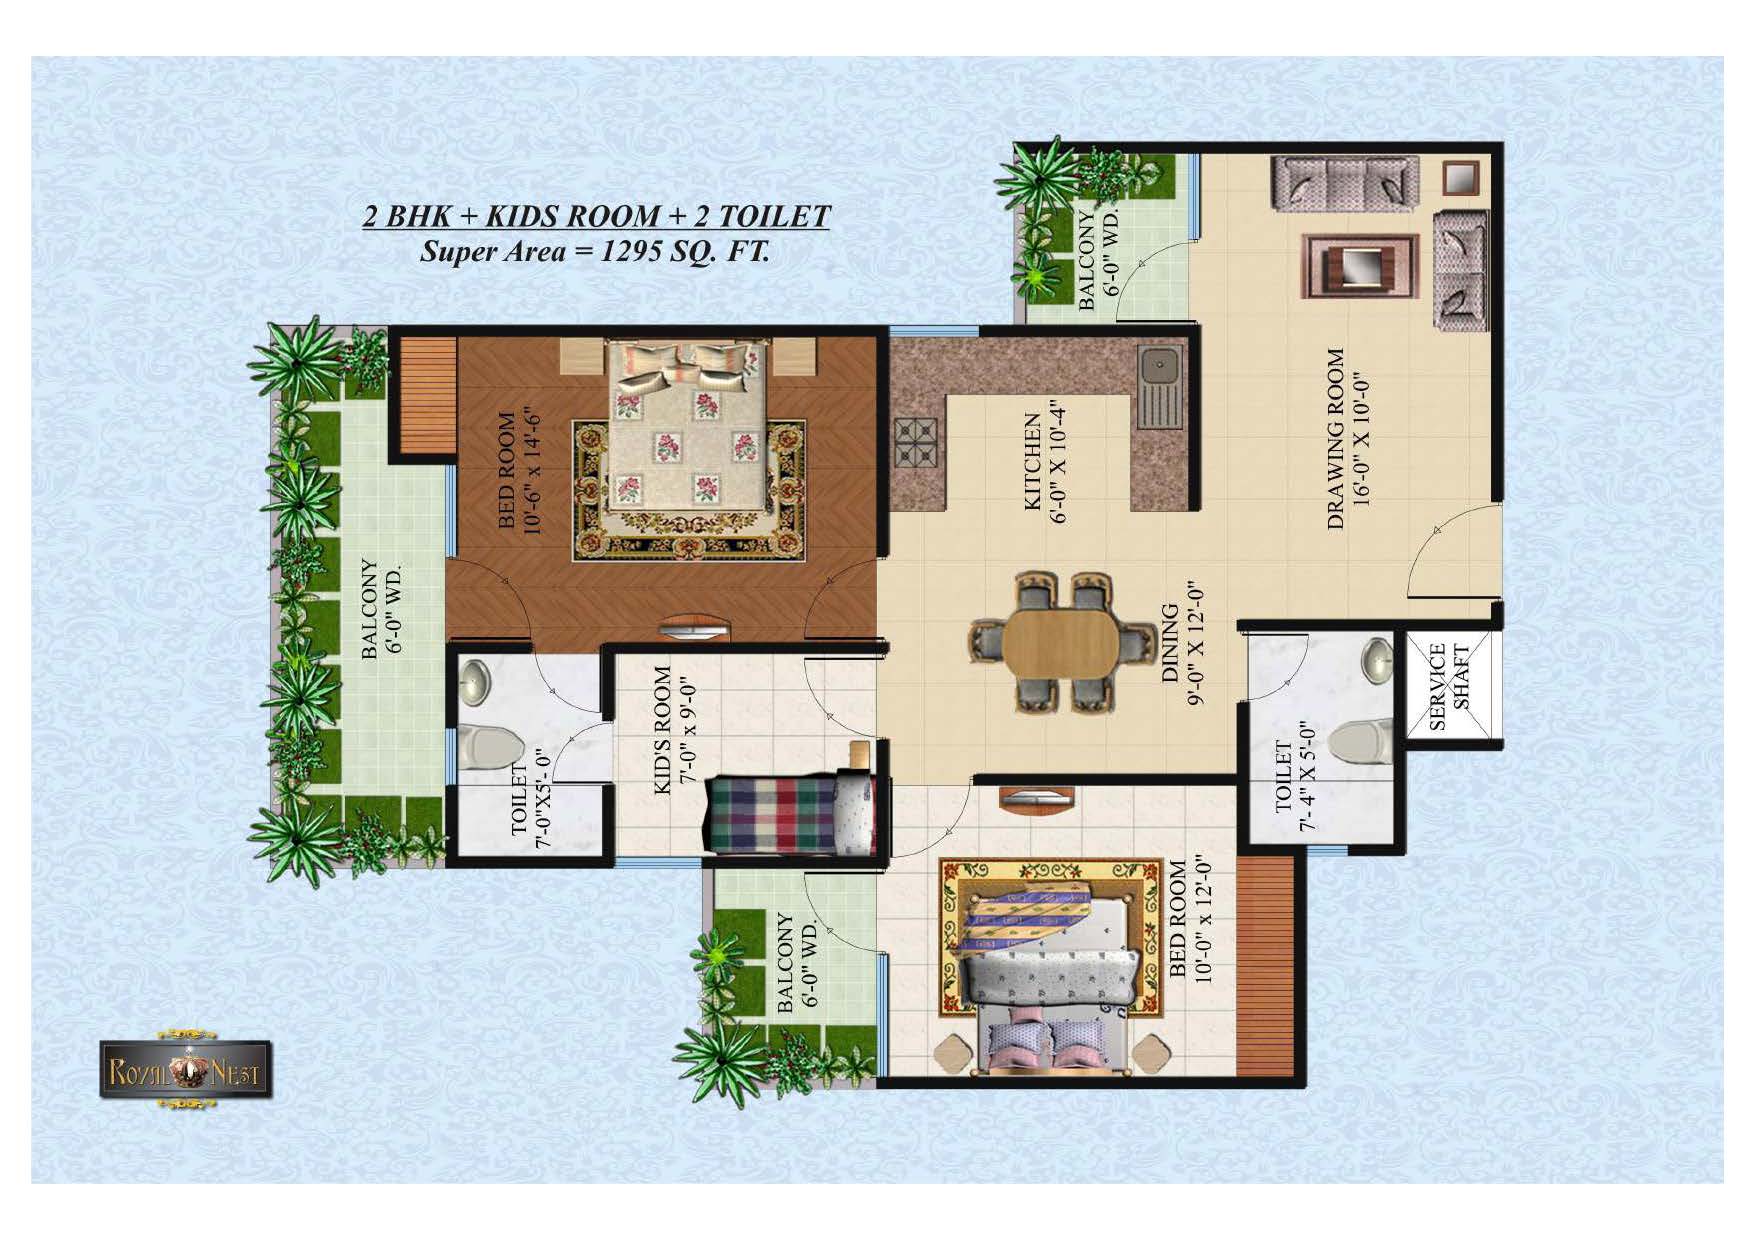 Omkar Royal Nest Floor Plan